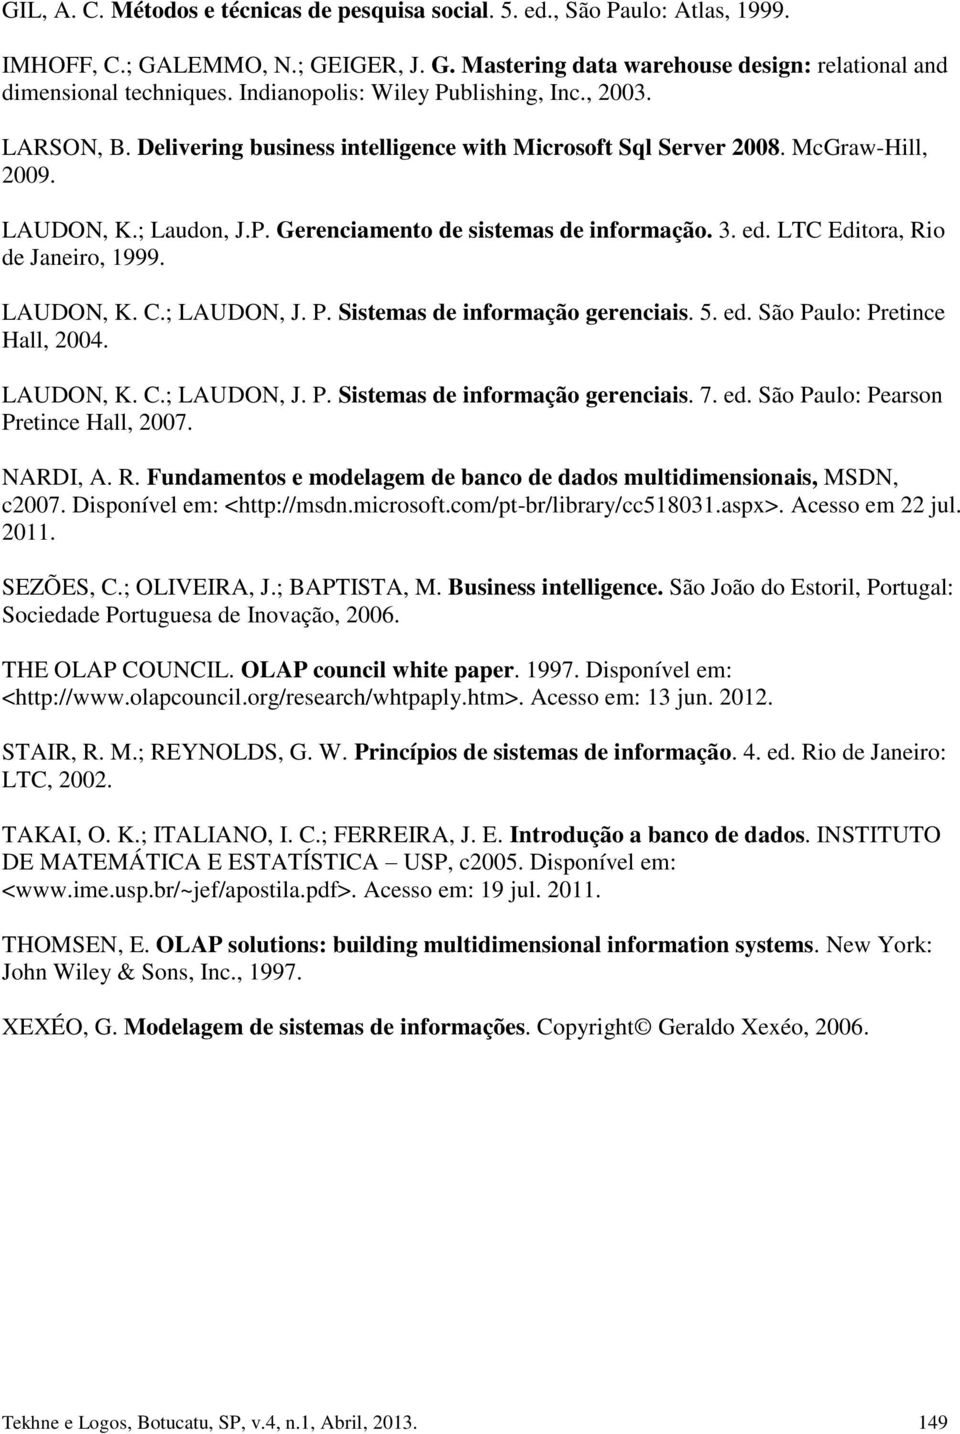 3. ed. LTC Editora, Rio de Janeiro, 1999. LAUDON, K. C.; LAUDON, J. P. Sistemas de informação gerenciais. 5. ed. São Paulo: Pretince Hall, 2004. LAUDON, K. C.; LAUDON, J. P. Sistemas de informação gerenciais. 7.